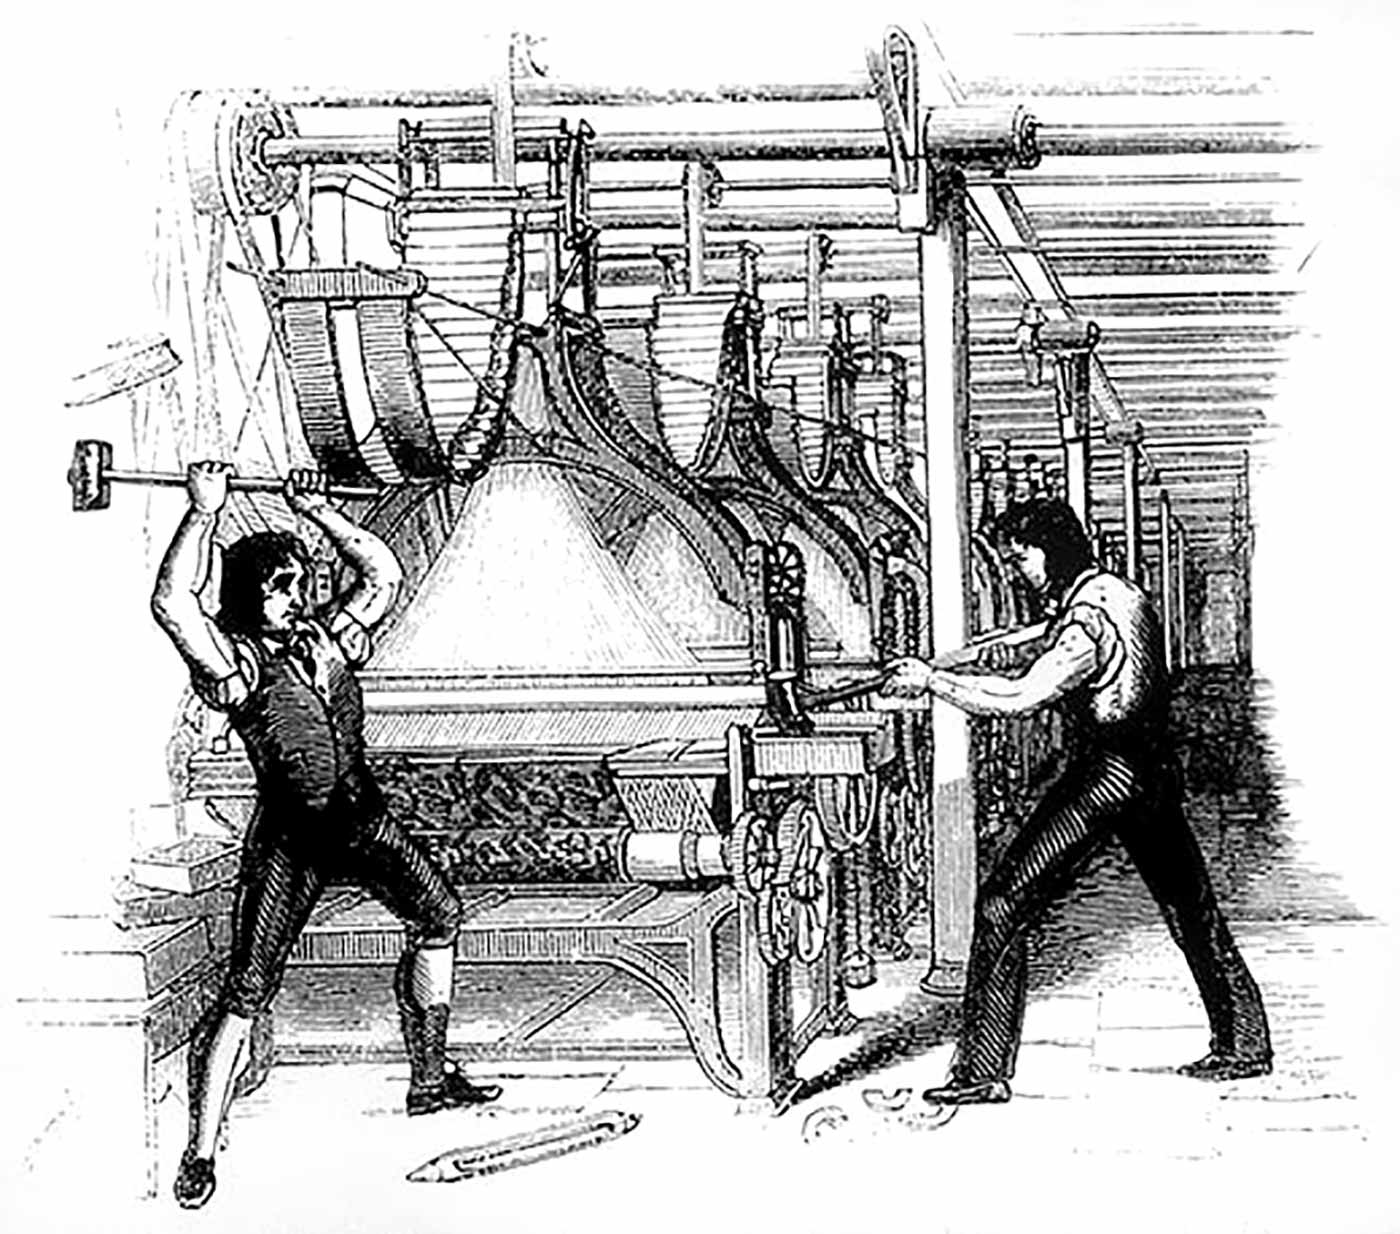 Frame-breakers, or Luddites, smashing a loom.